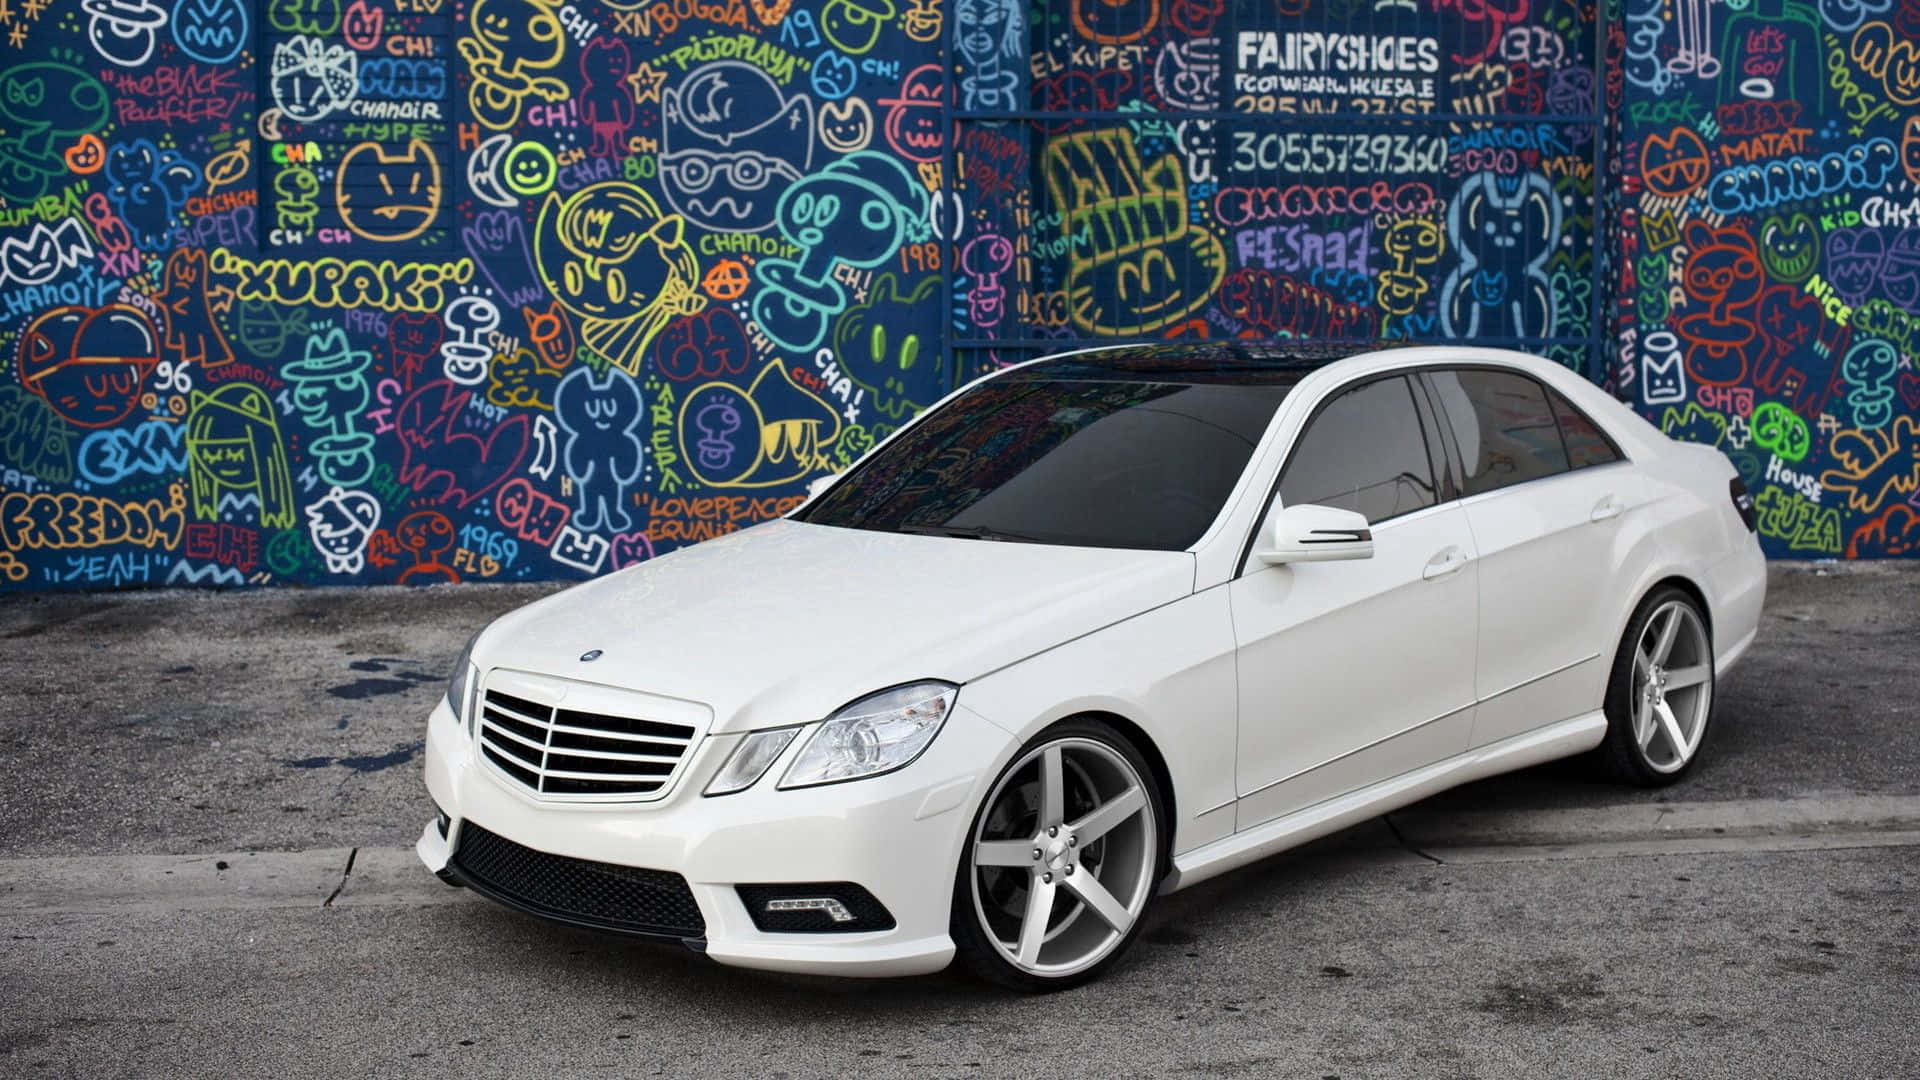 Feel the power of Mercedes-Benz. Wallpaper